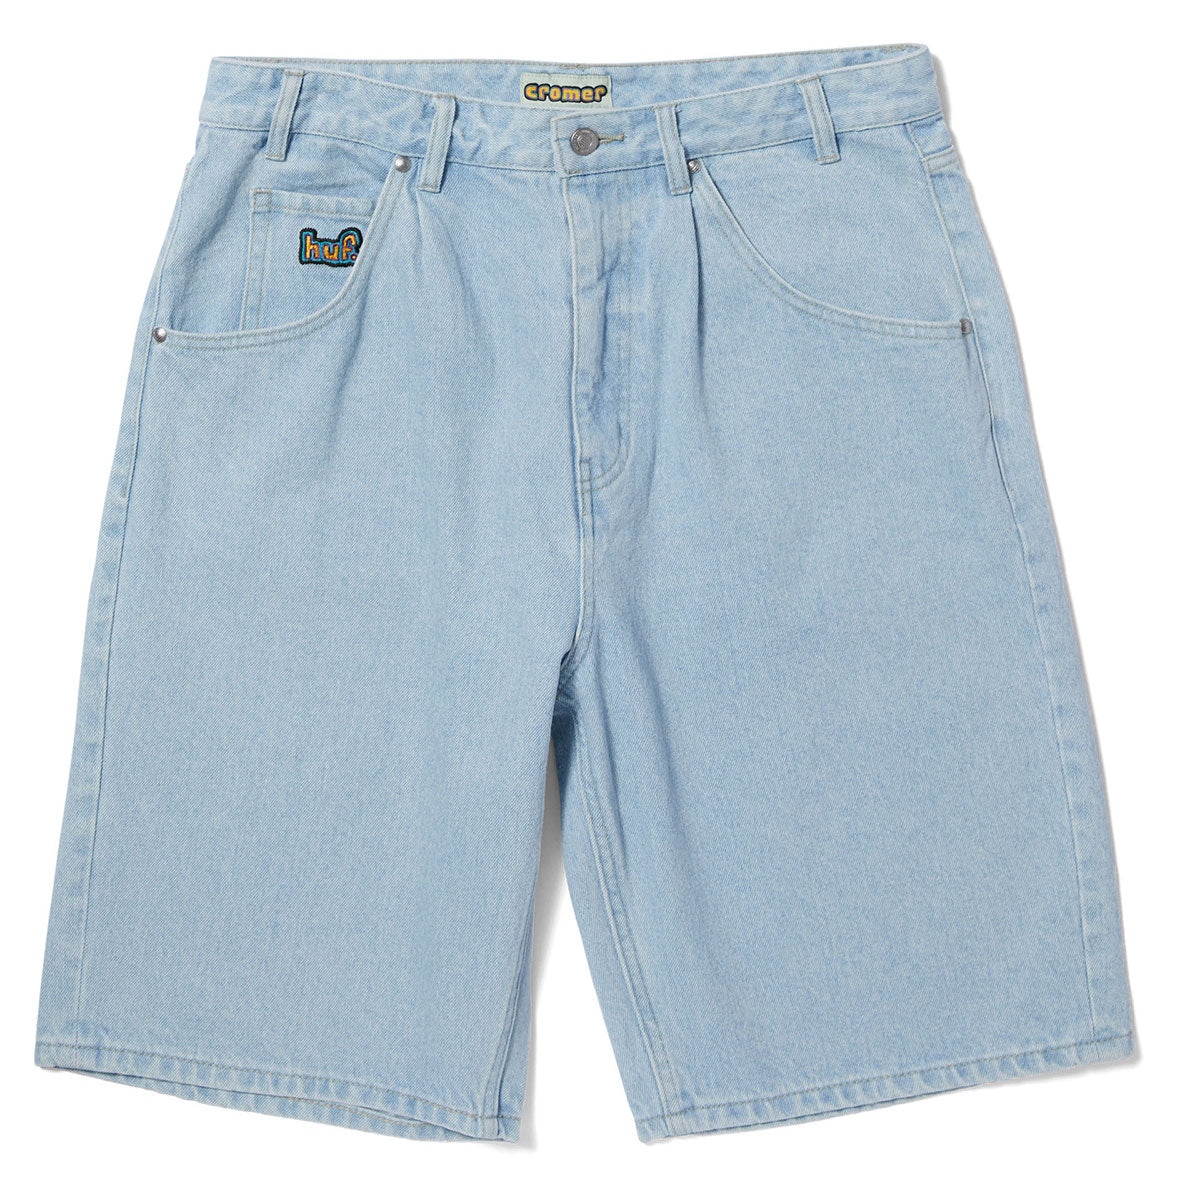 HUF Cromer Shorts - Light Blue image 1